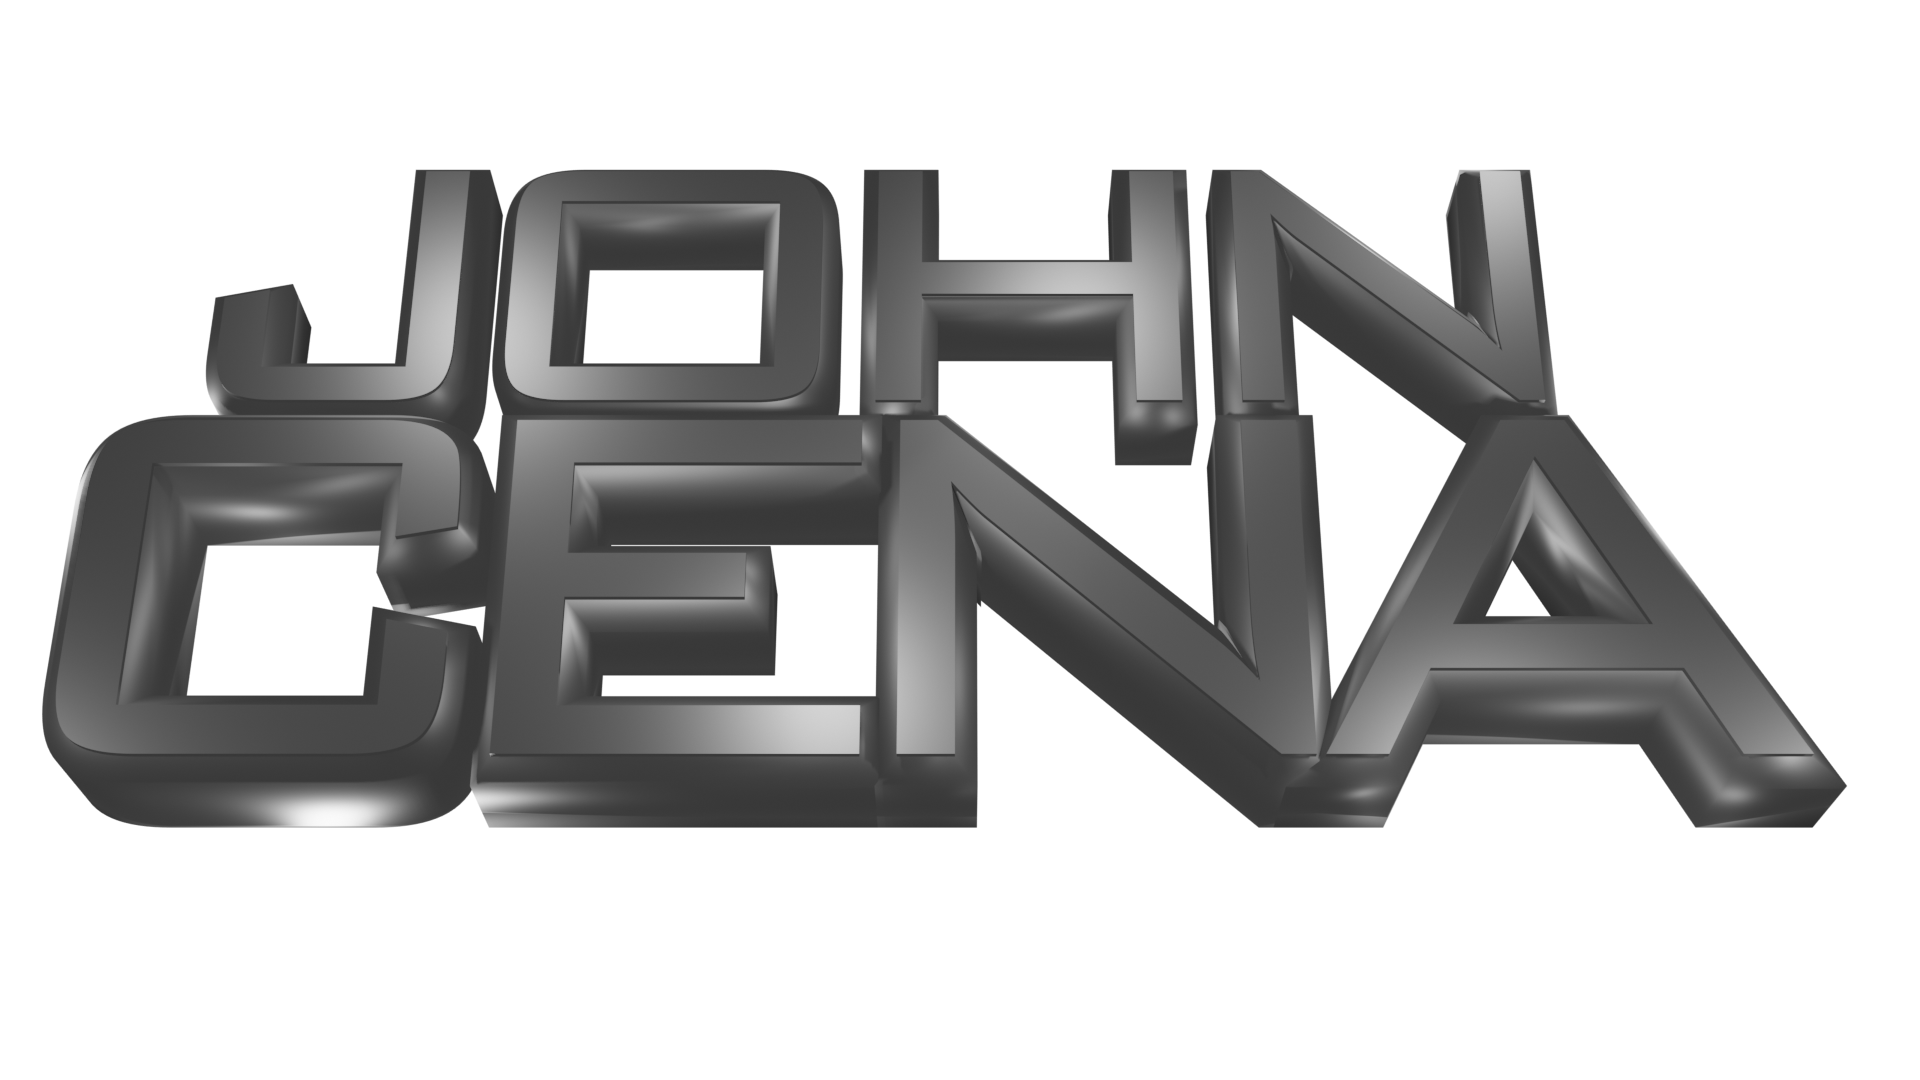 John Cena (2005) Blender Render v4 by TheRPRTNetwork on DeviantArt